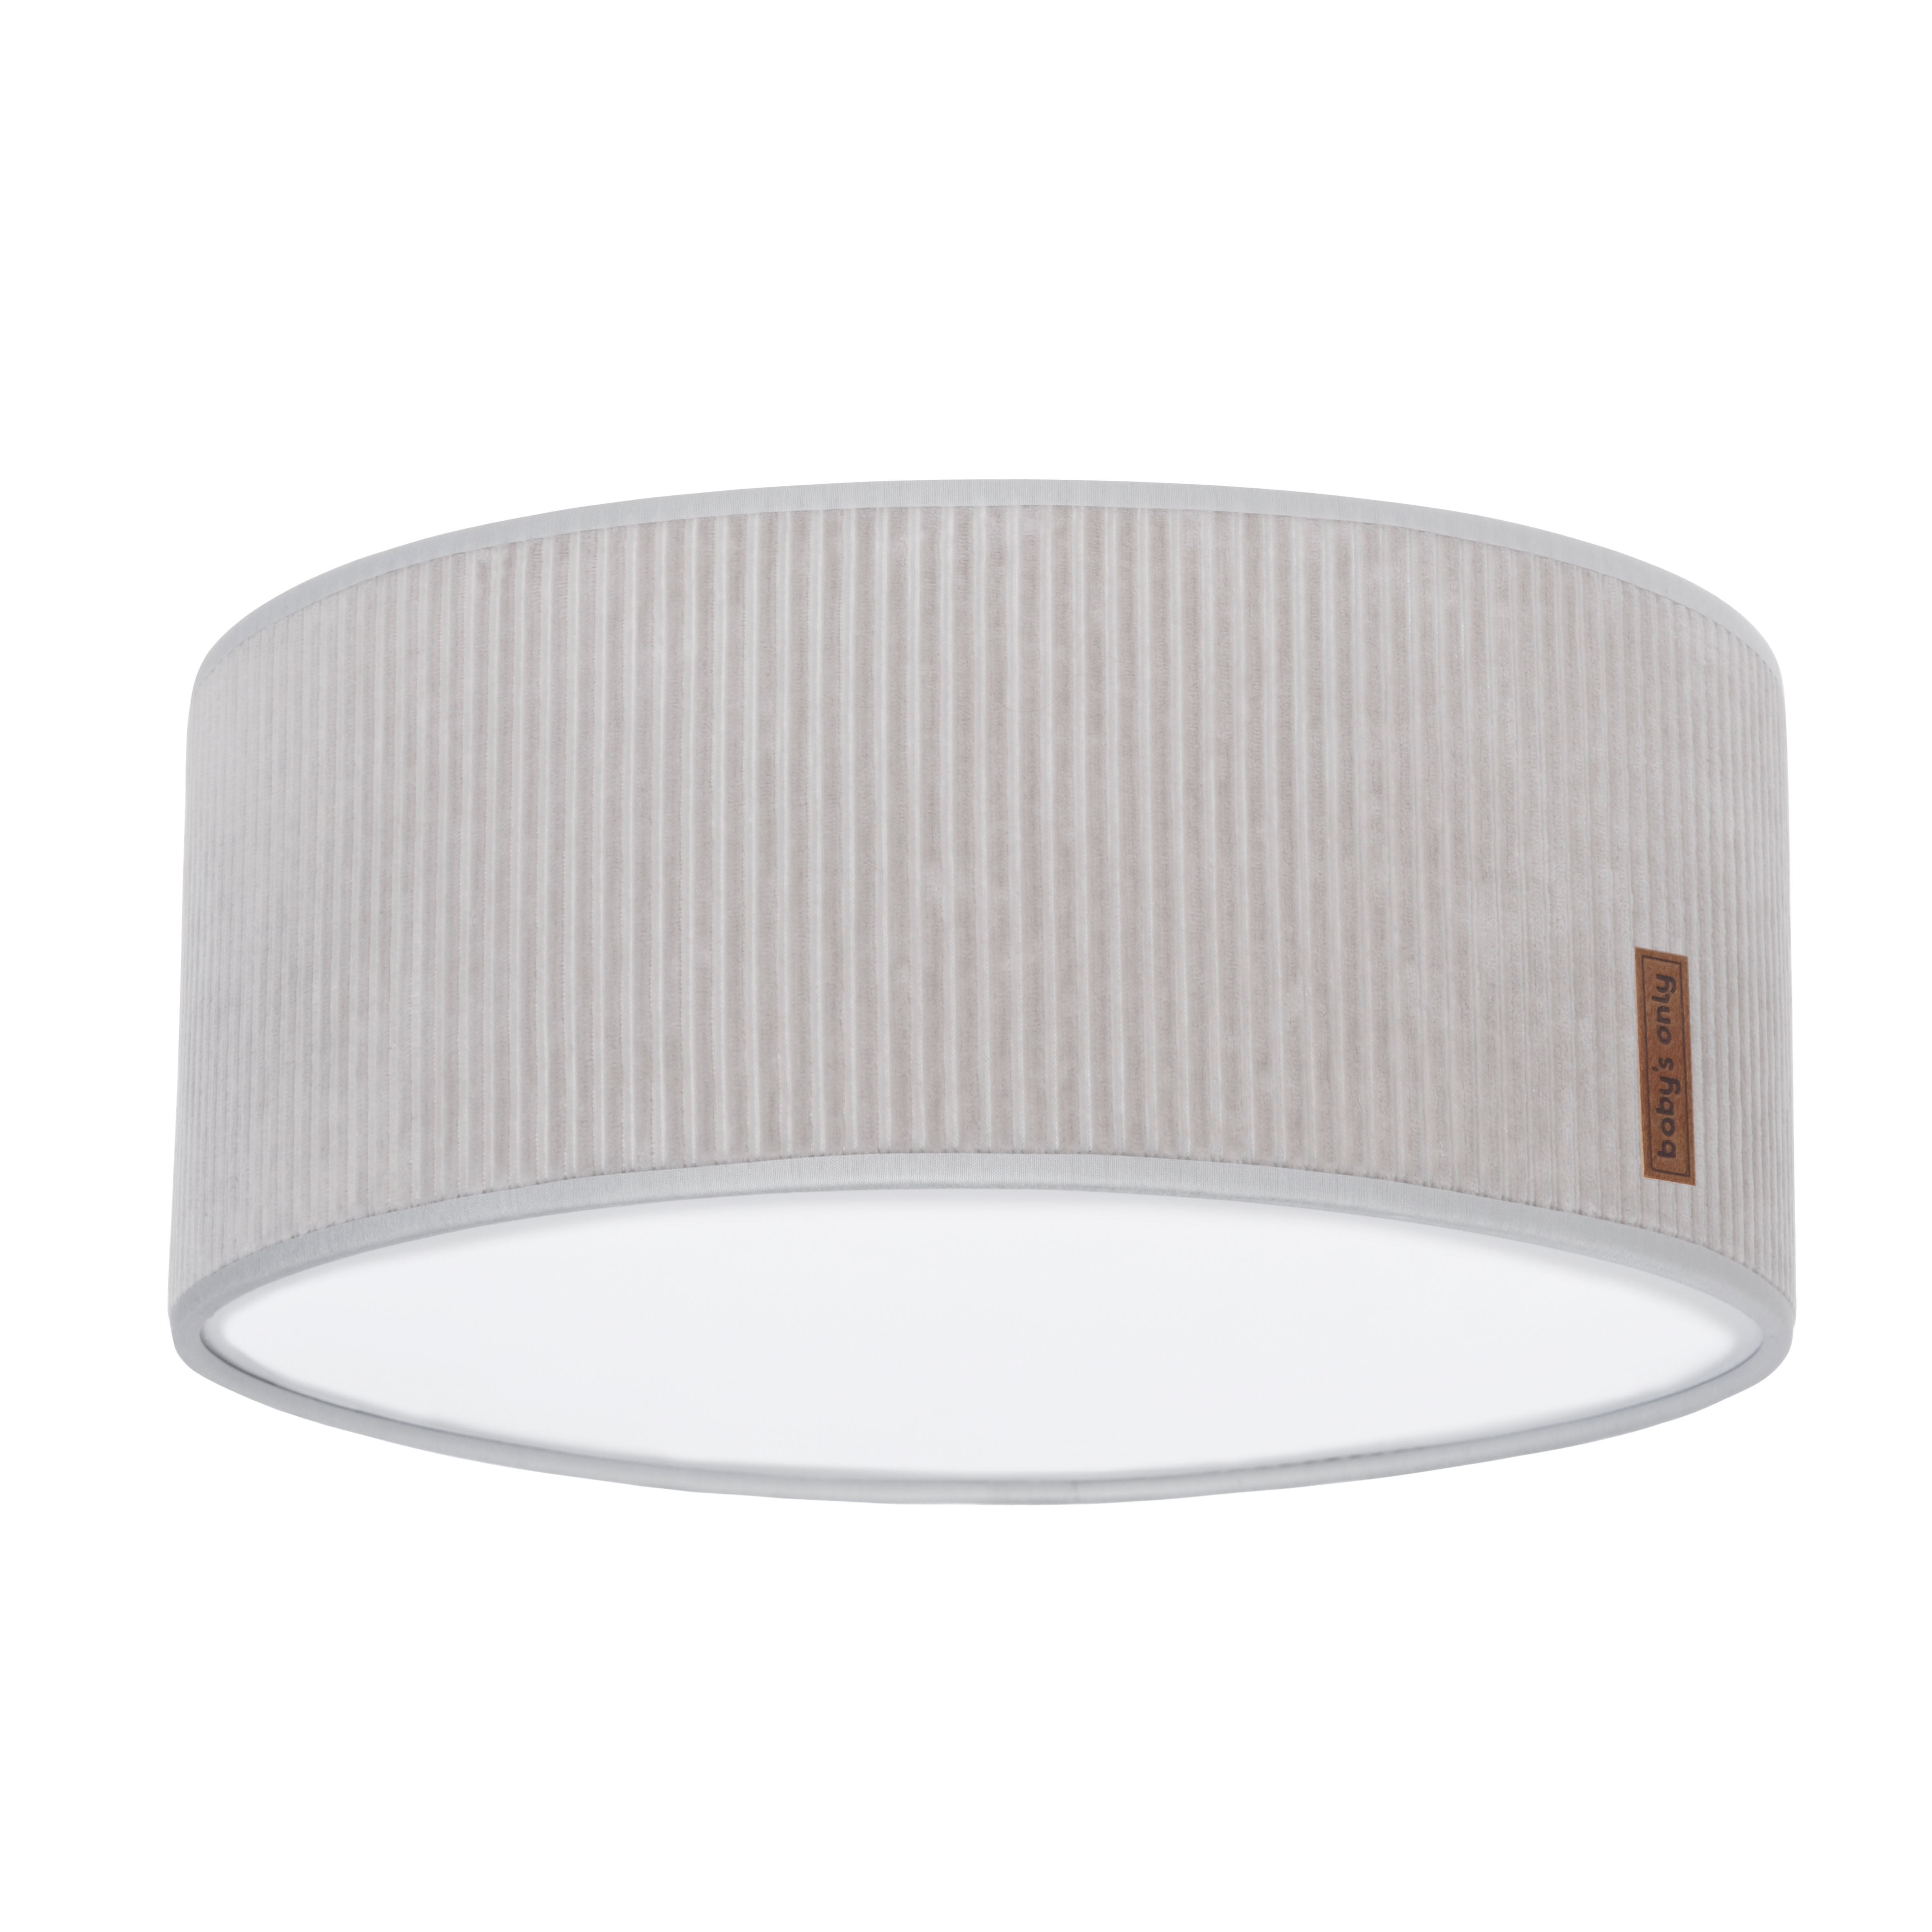 Ceiling lamp Sense pebble grey - Ø35 cm